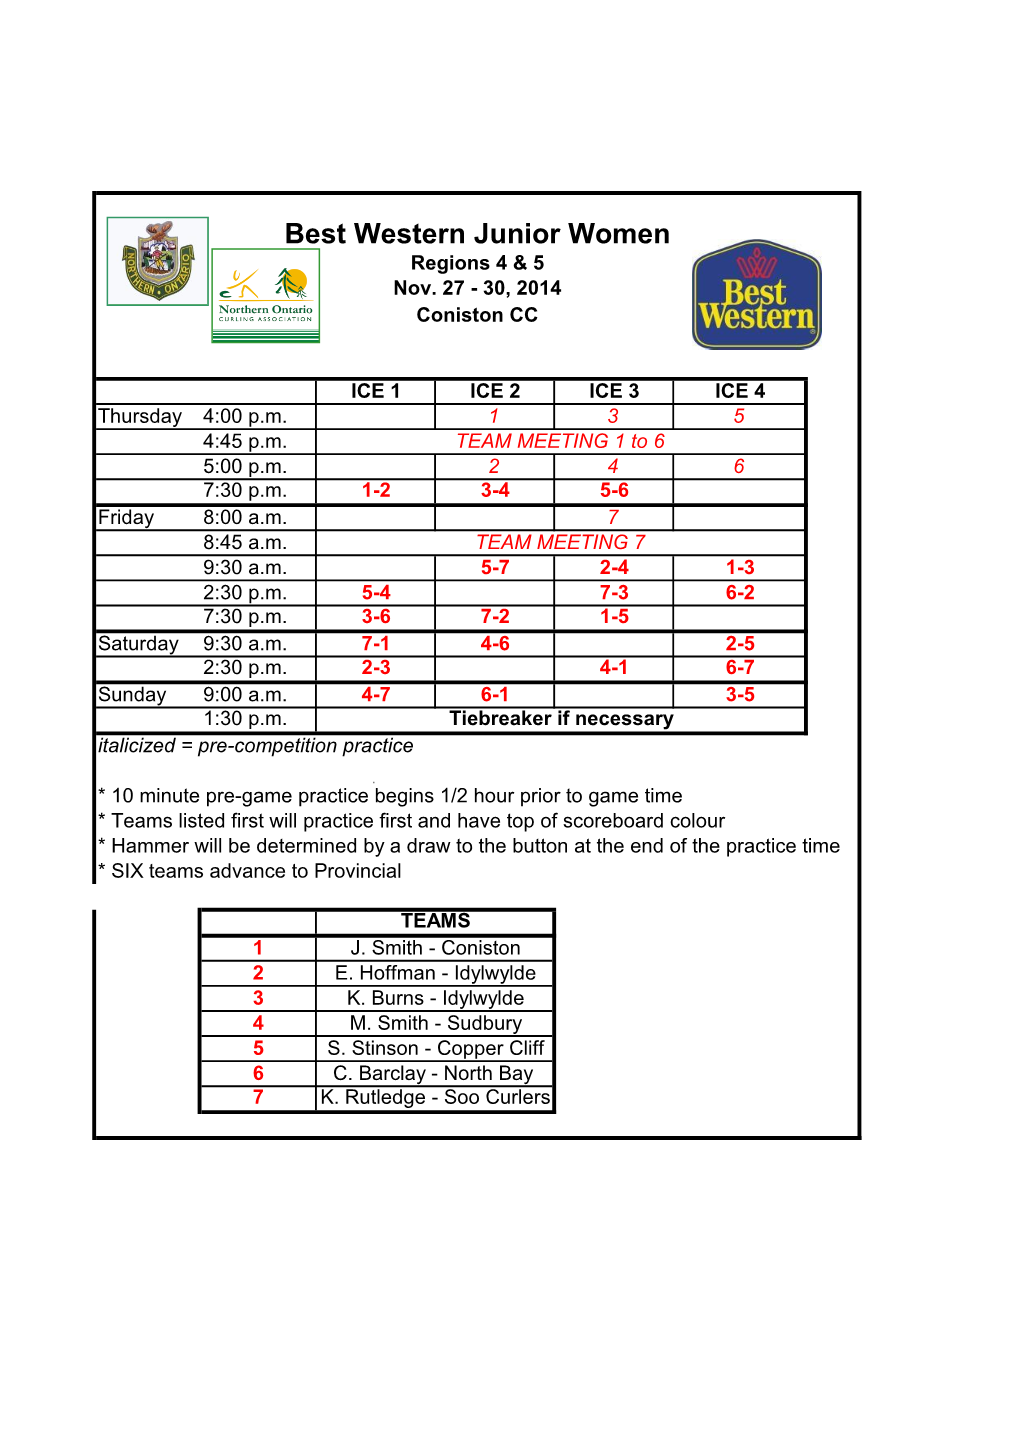 Best Western Junior Women Regions 4 & 5 Nov